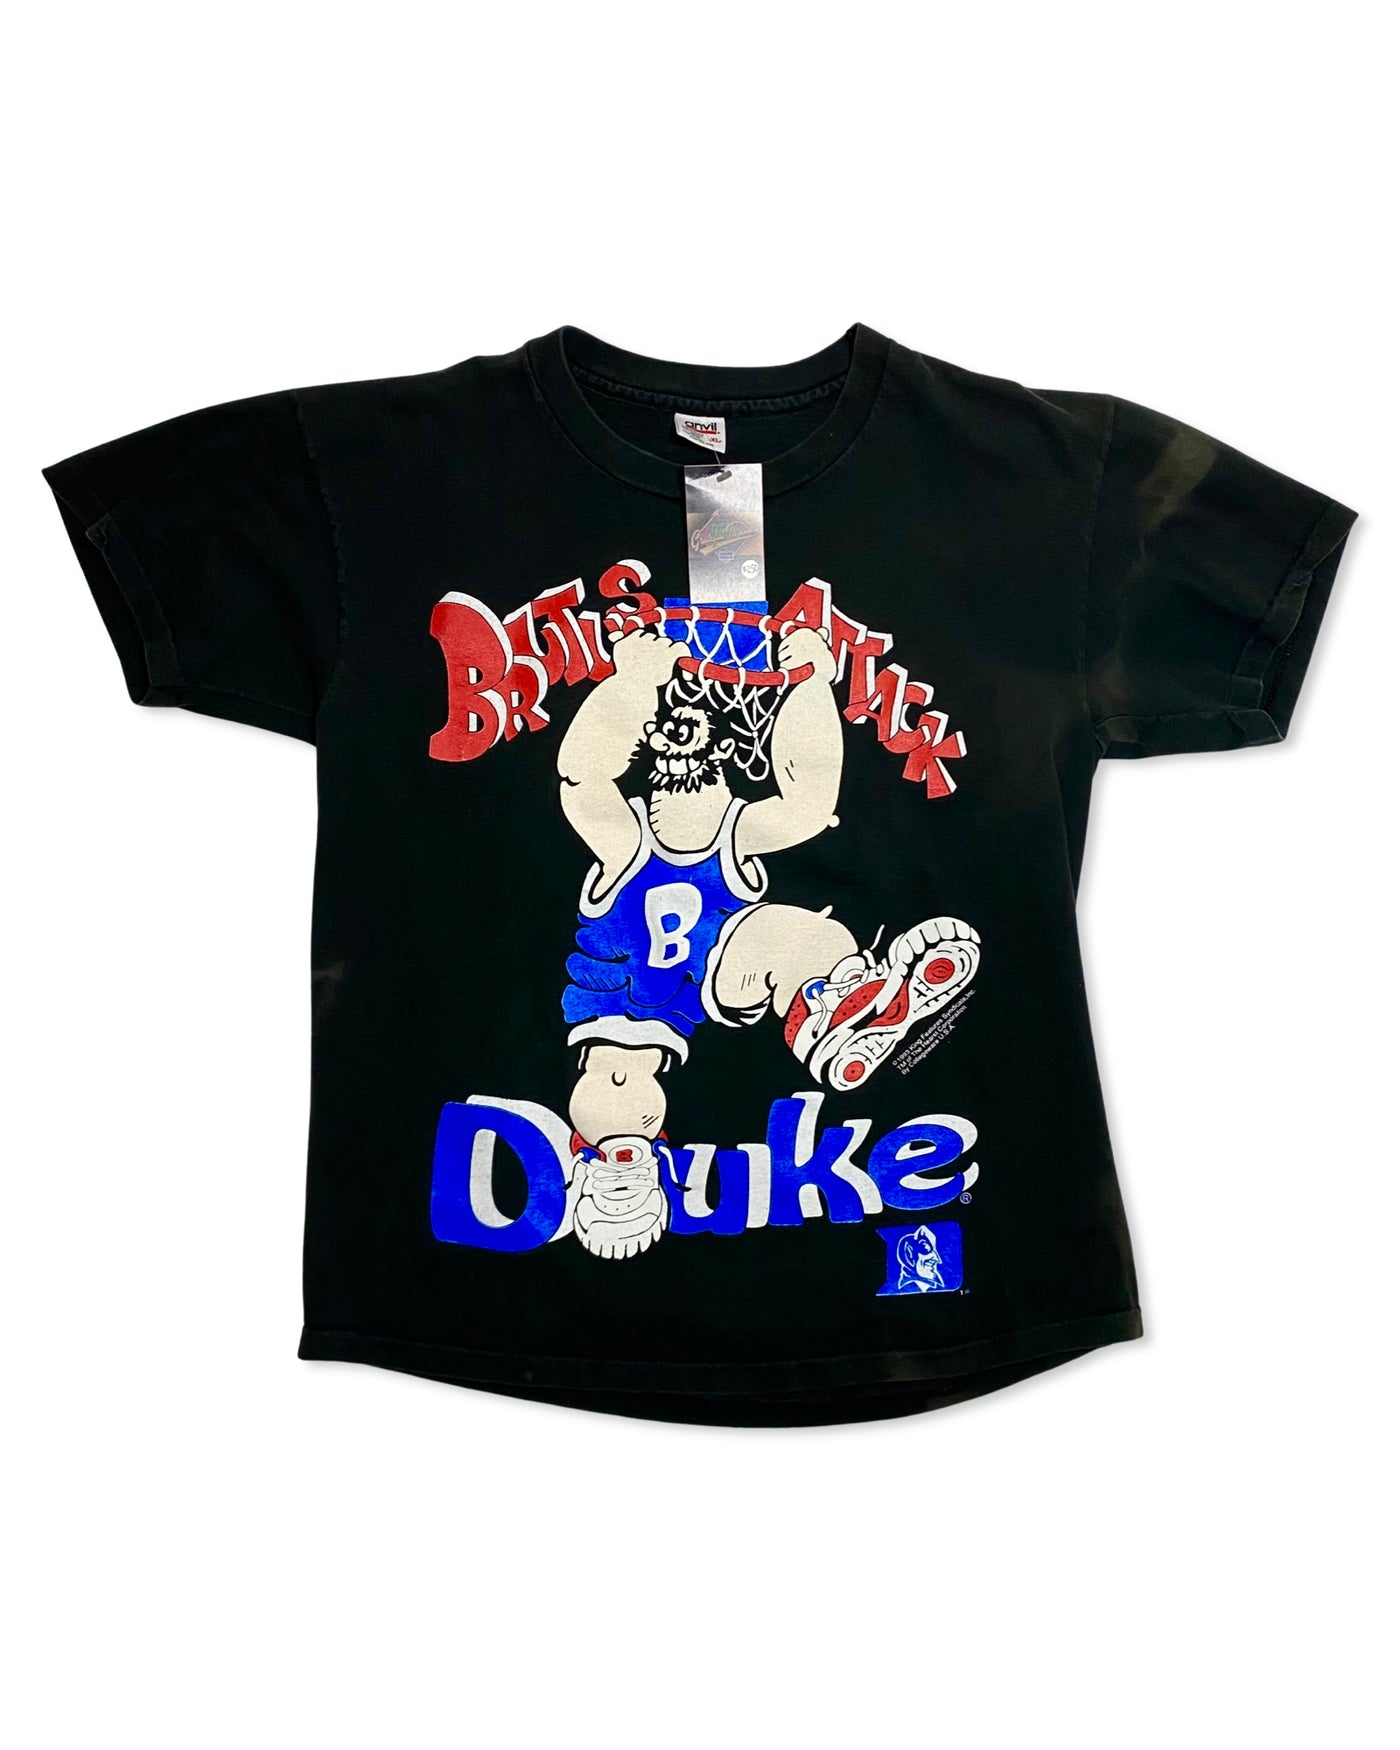 Vintage 1993 Popeye ‘Brutus Attack’ Duke Basketball T-Shirt